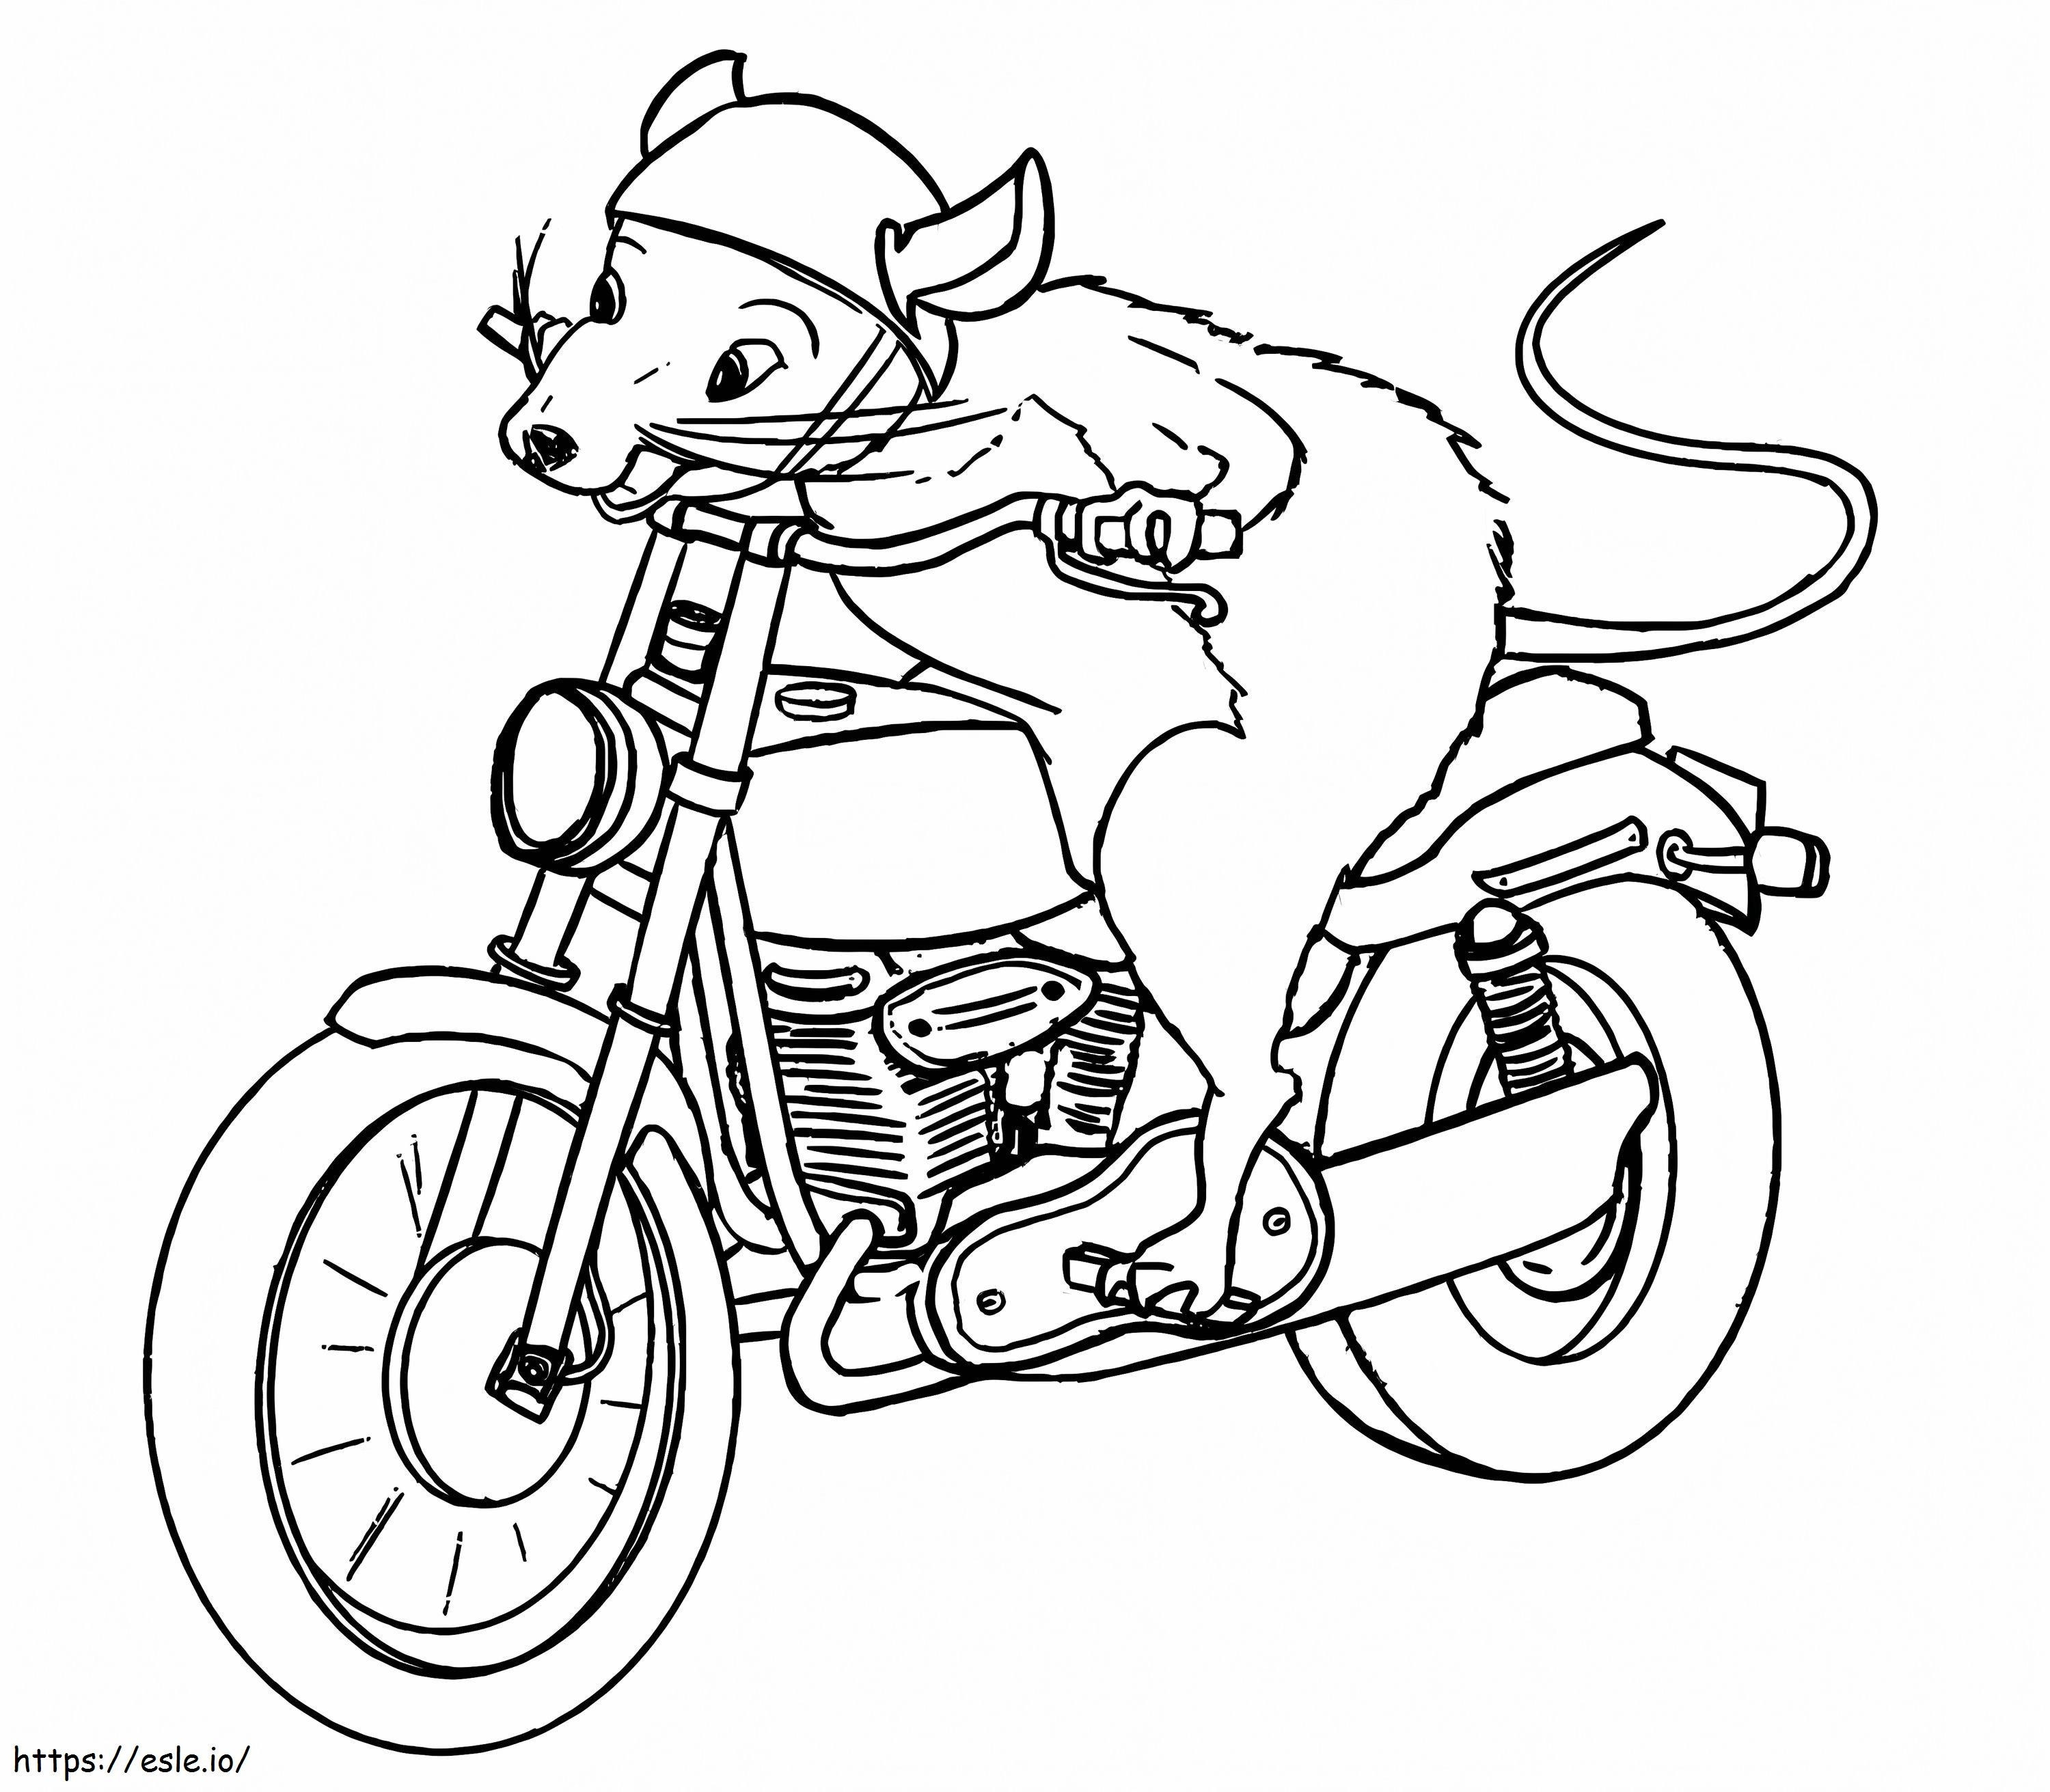 Maus fährt Motorrad ausmalbilder